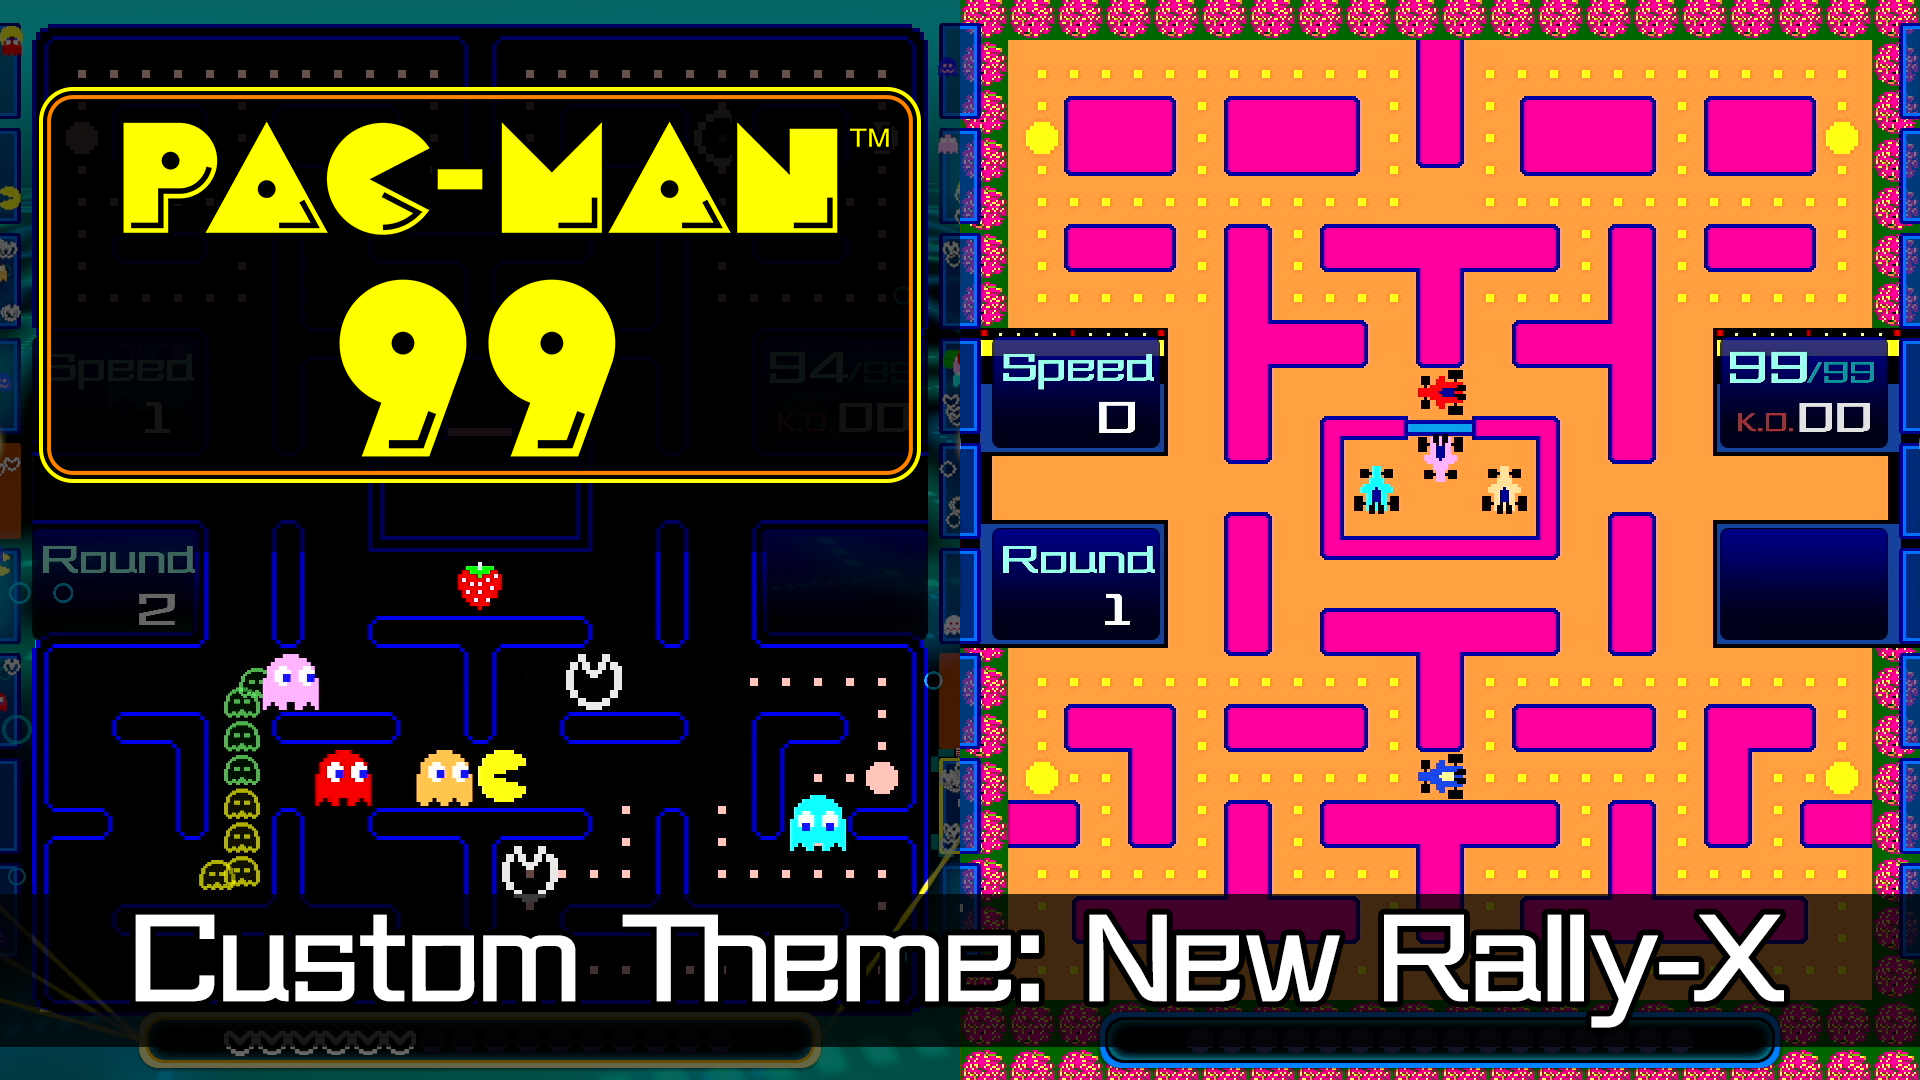 PAC-MAN 99 Custom Theme: New Rally-X